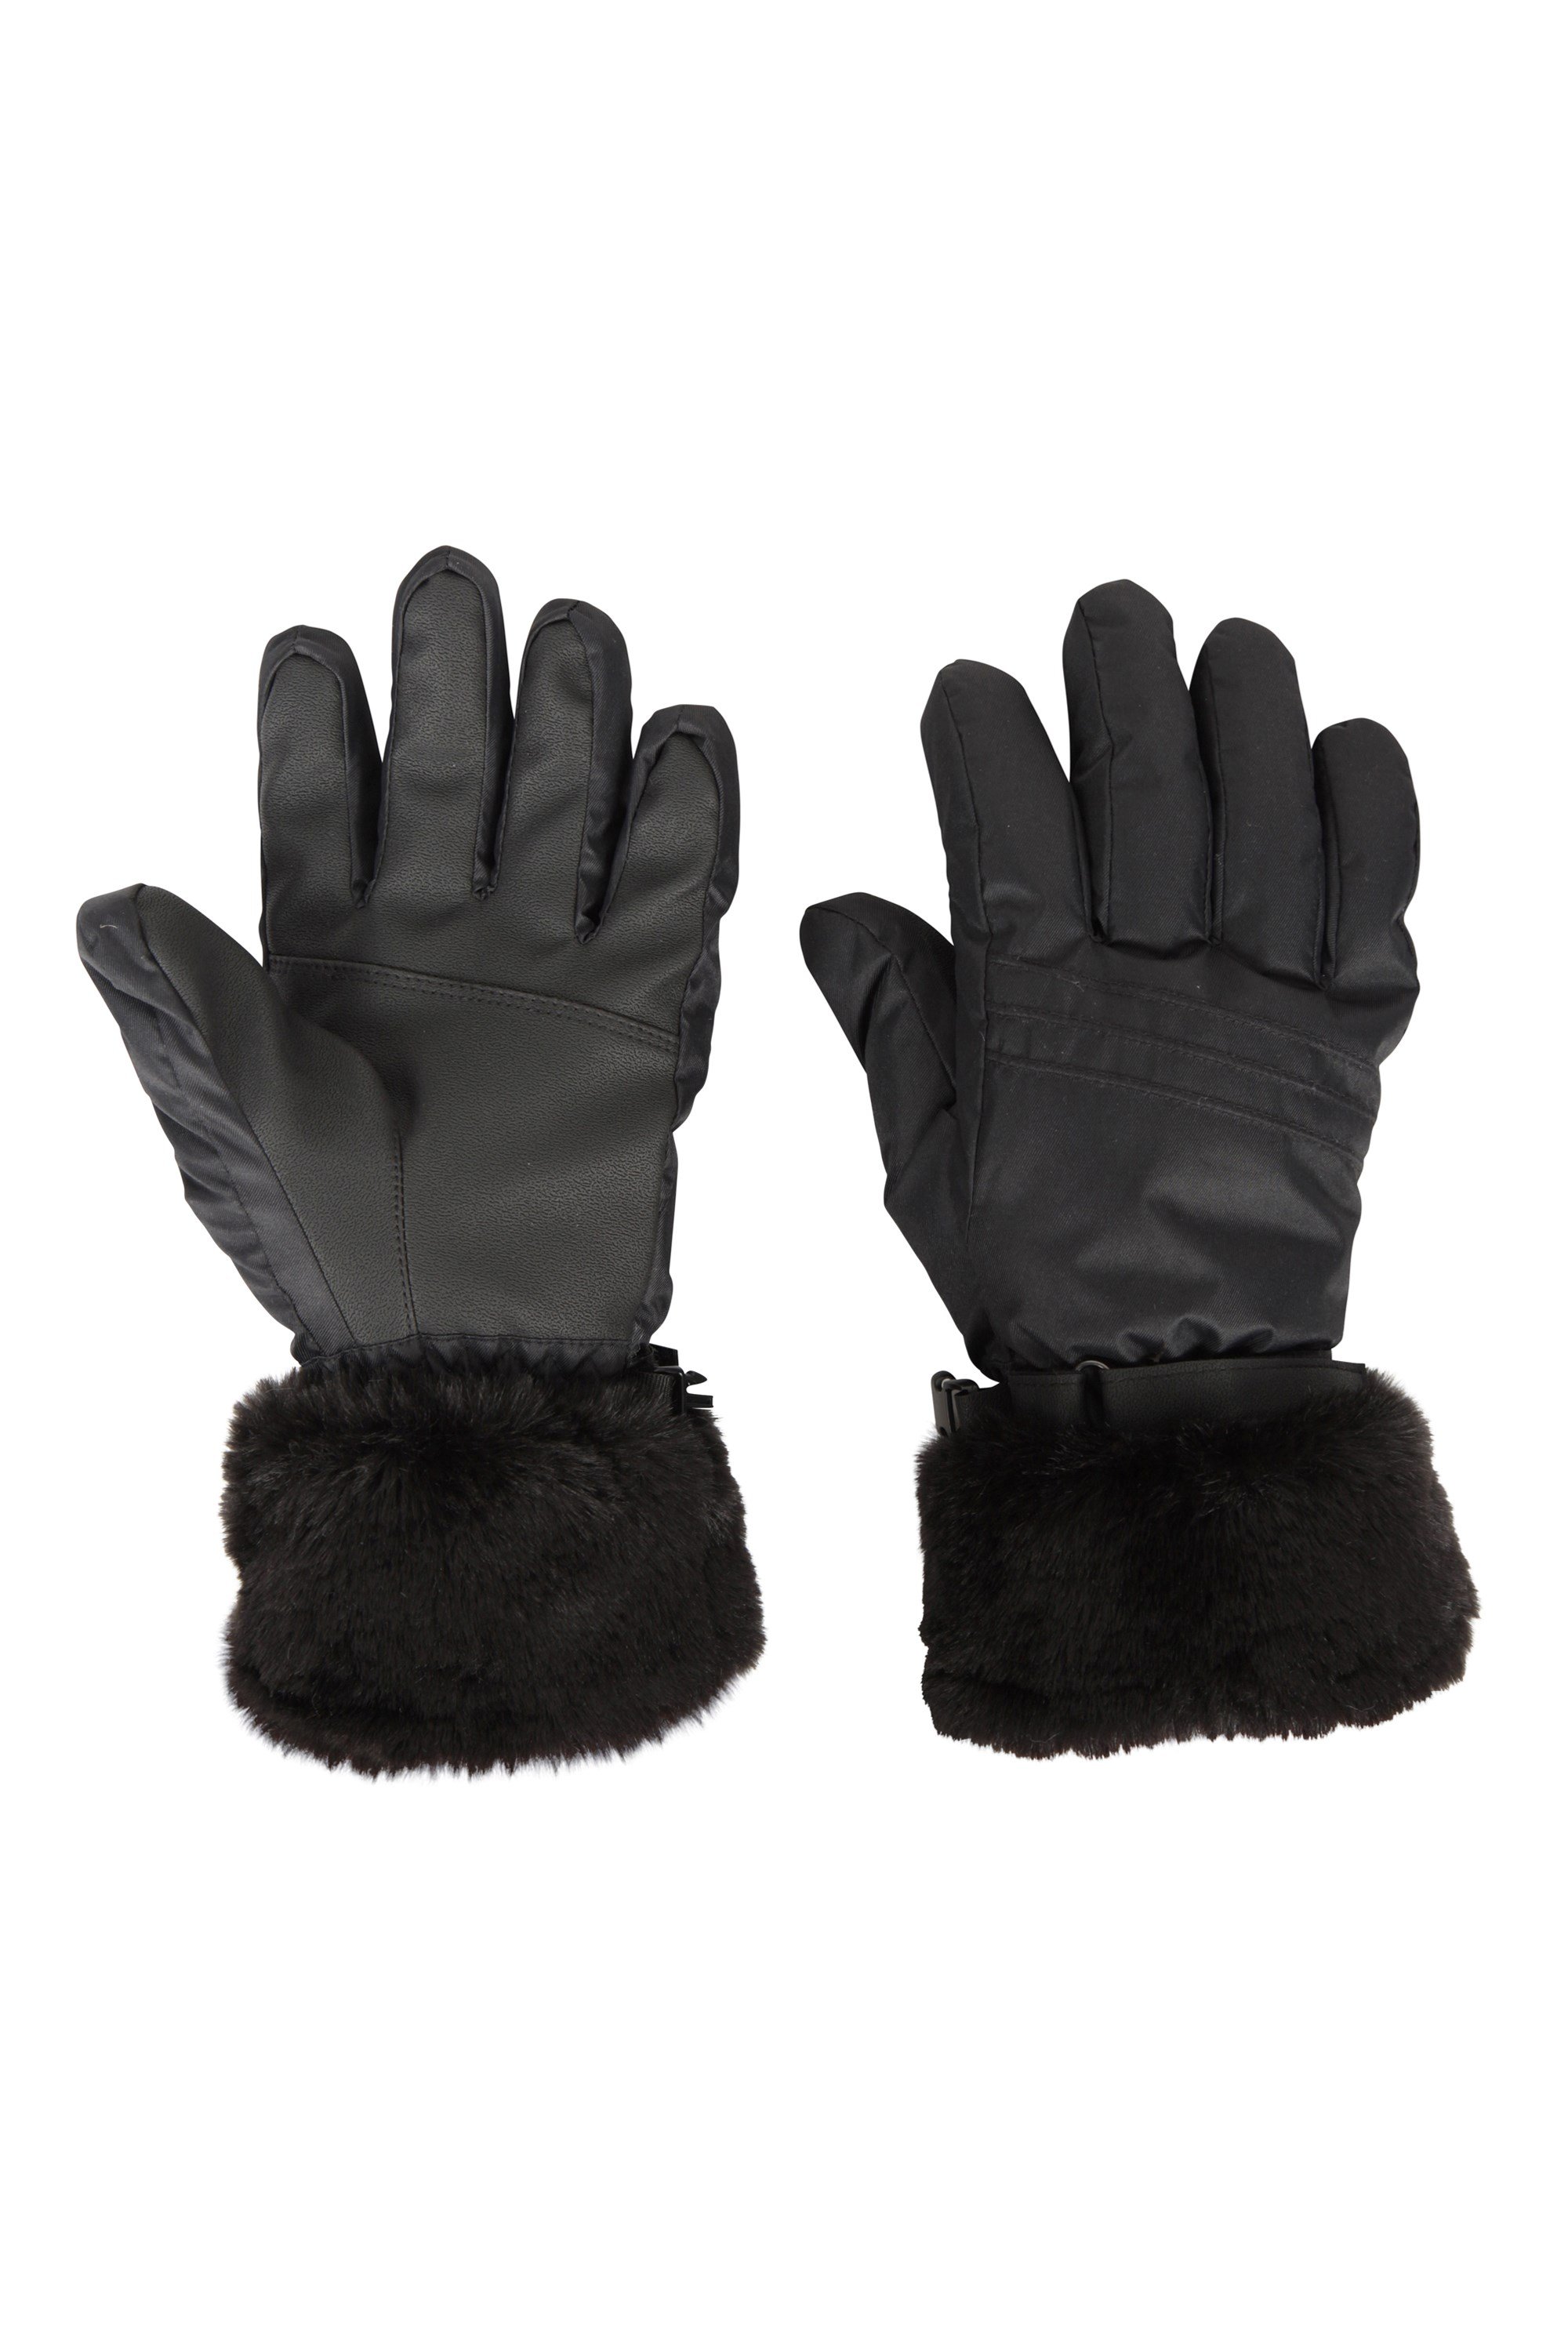 Parallax Womens Waterproof Ski Gloves | Mountain Warehouse GB